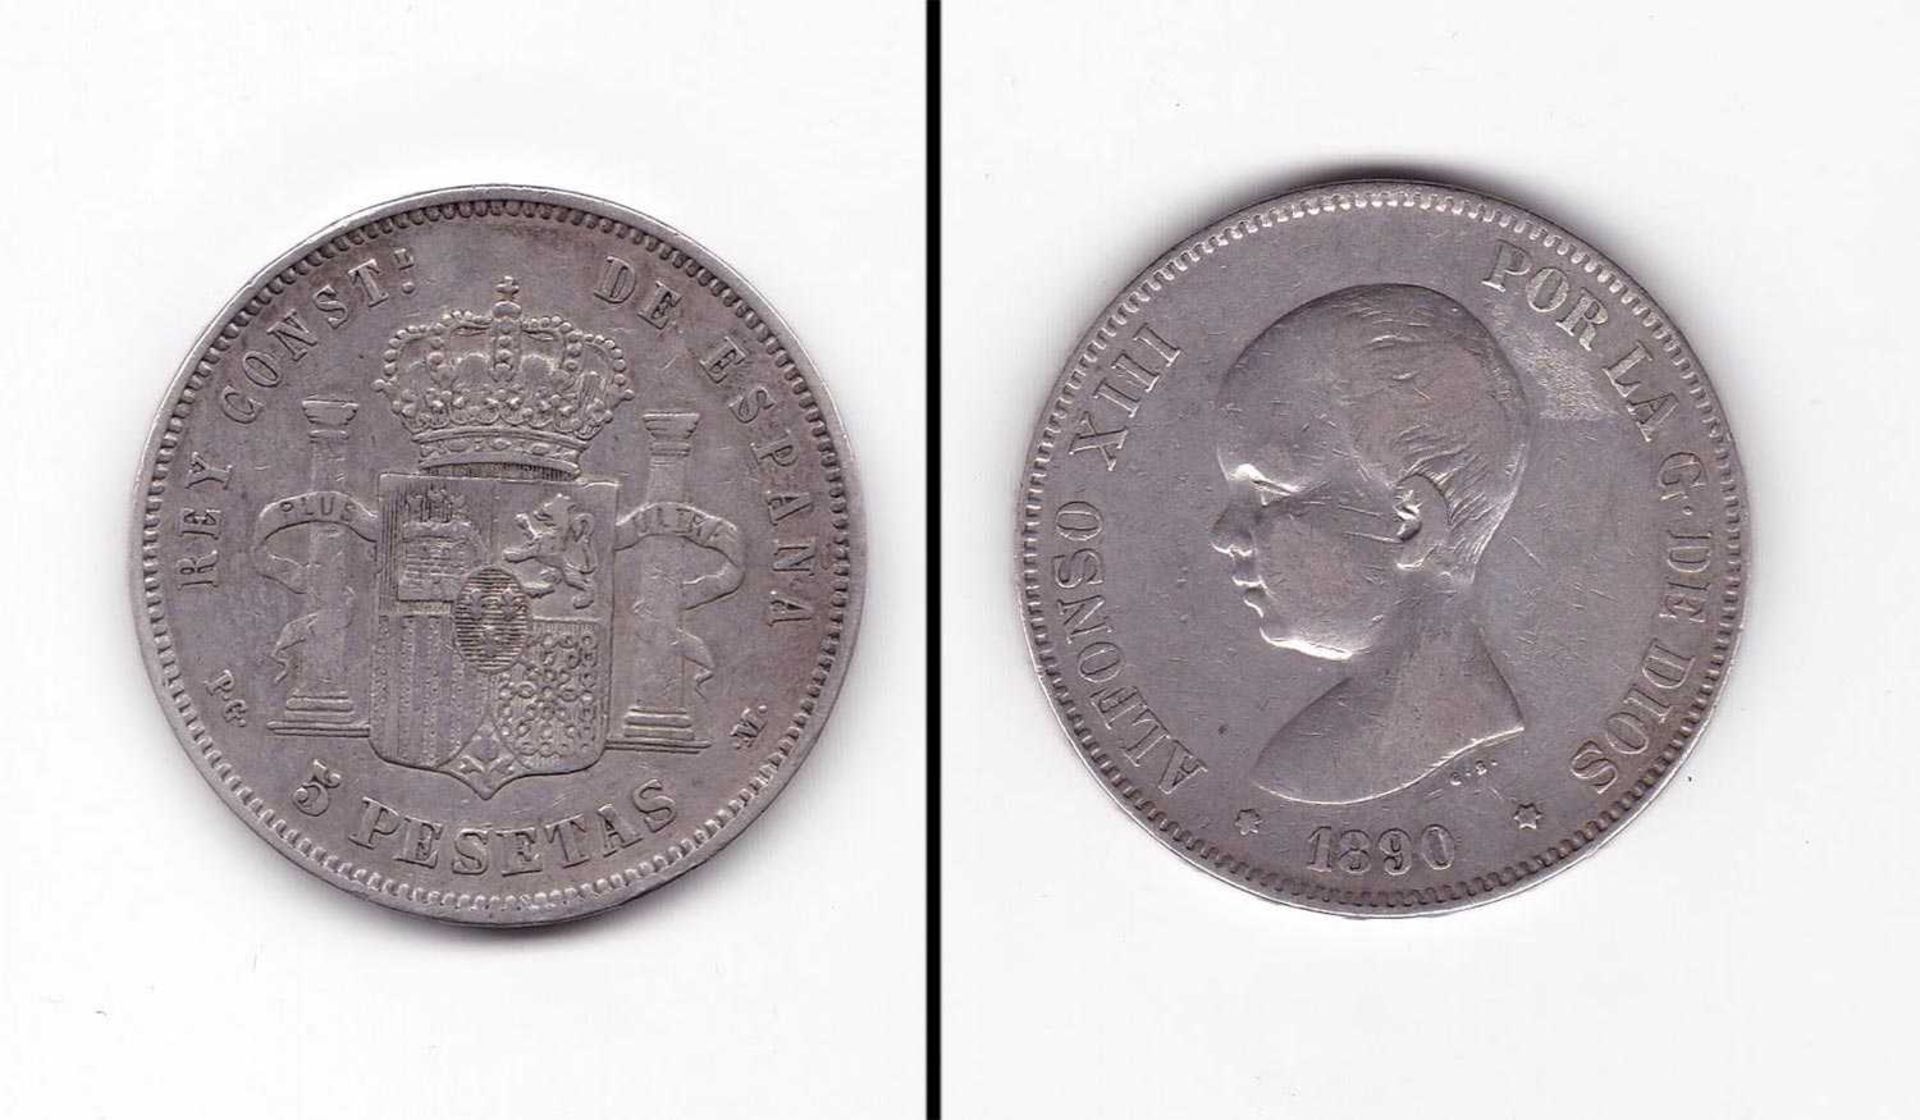 5 Pesetas Spanien 1890, Alfonso XIII., Silber